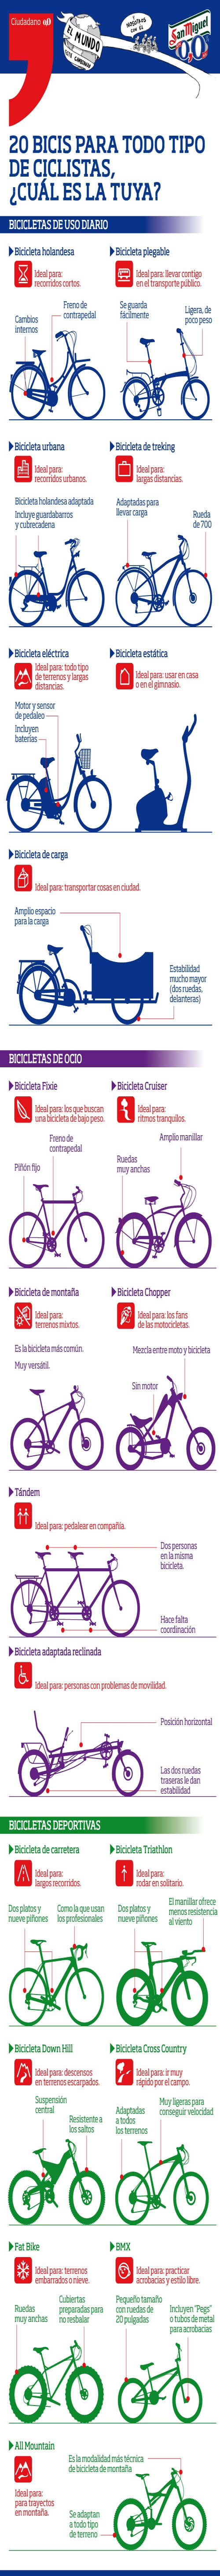 tipos-bicicletas-infografia